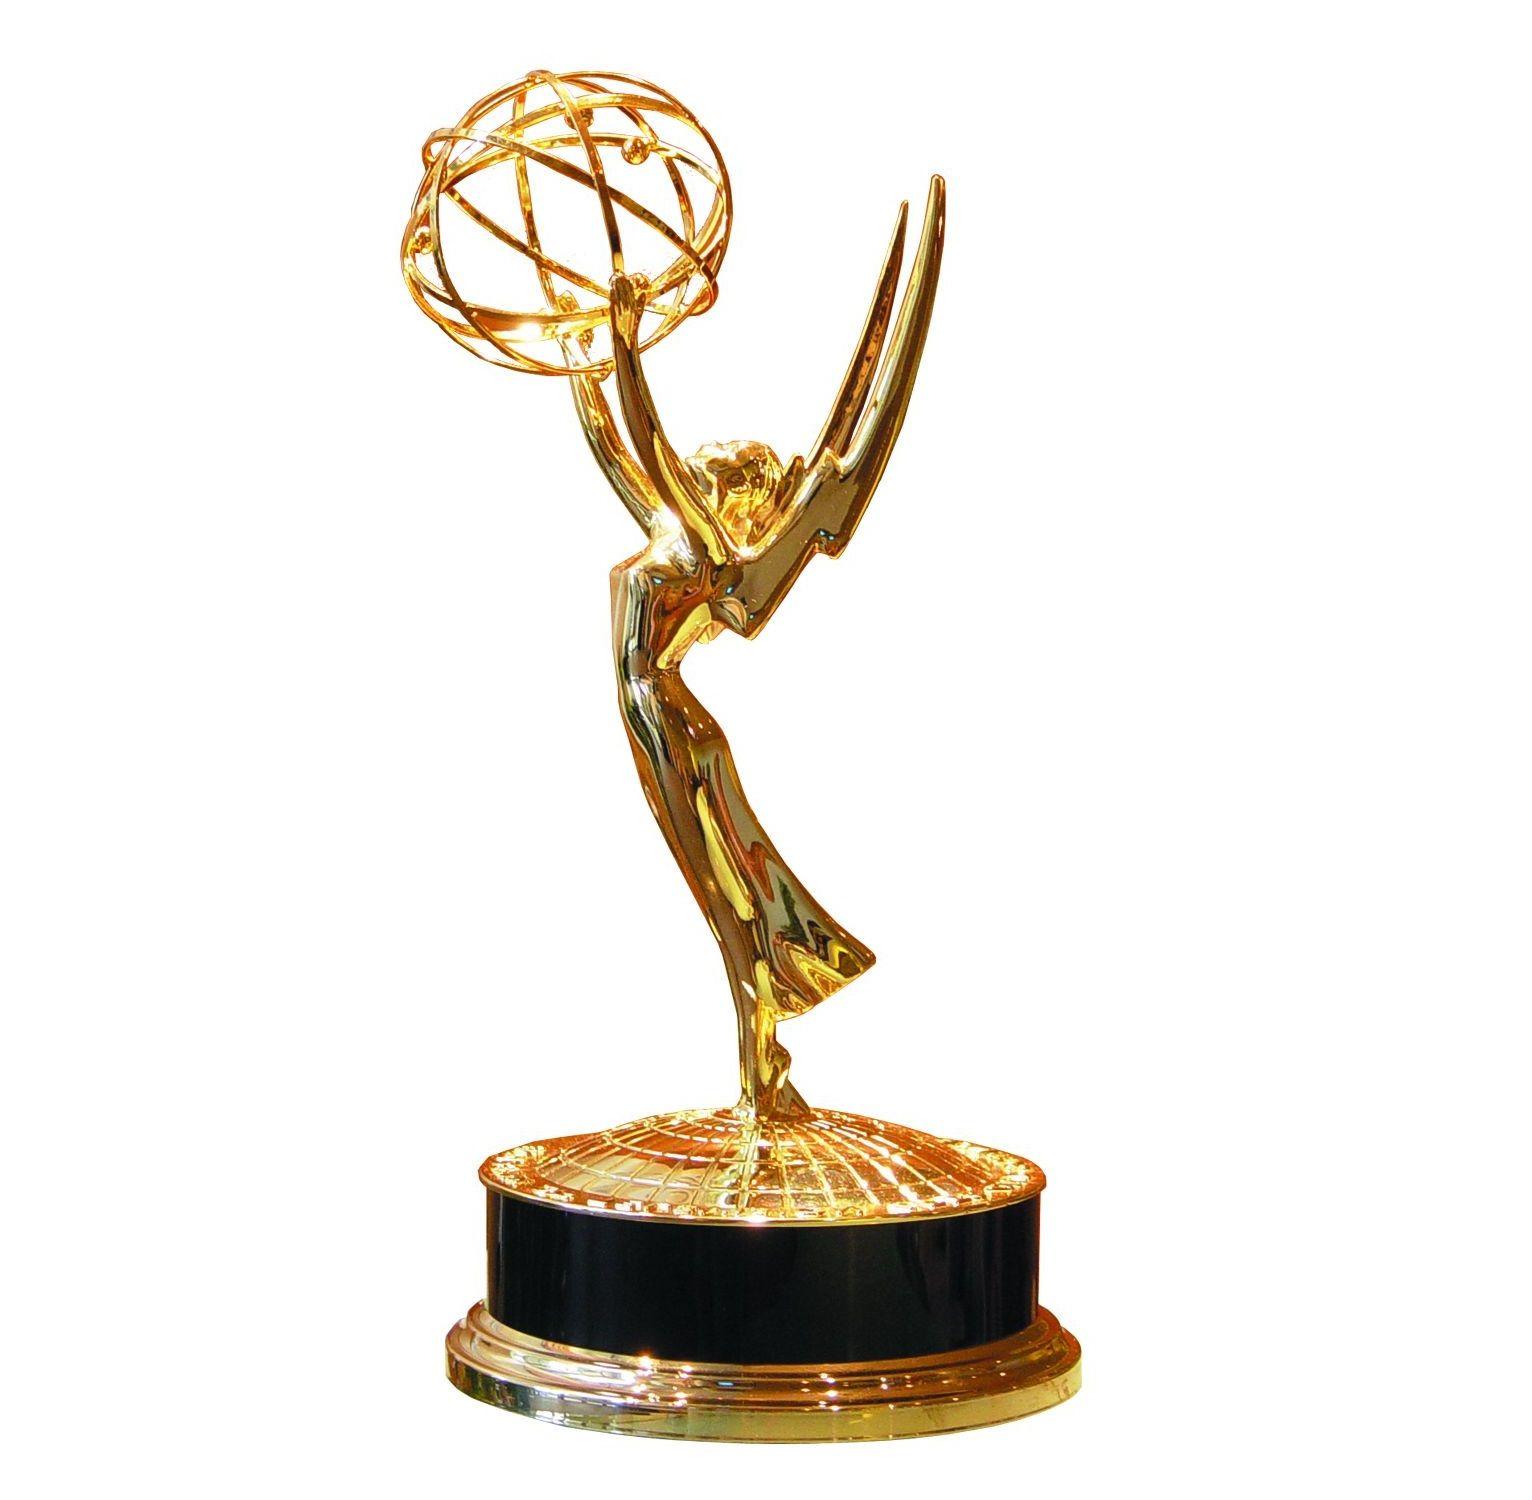 Emmy Logo - LogoDix